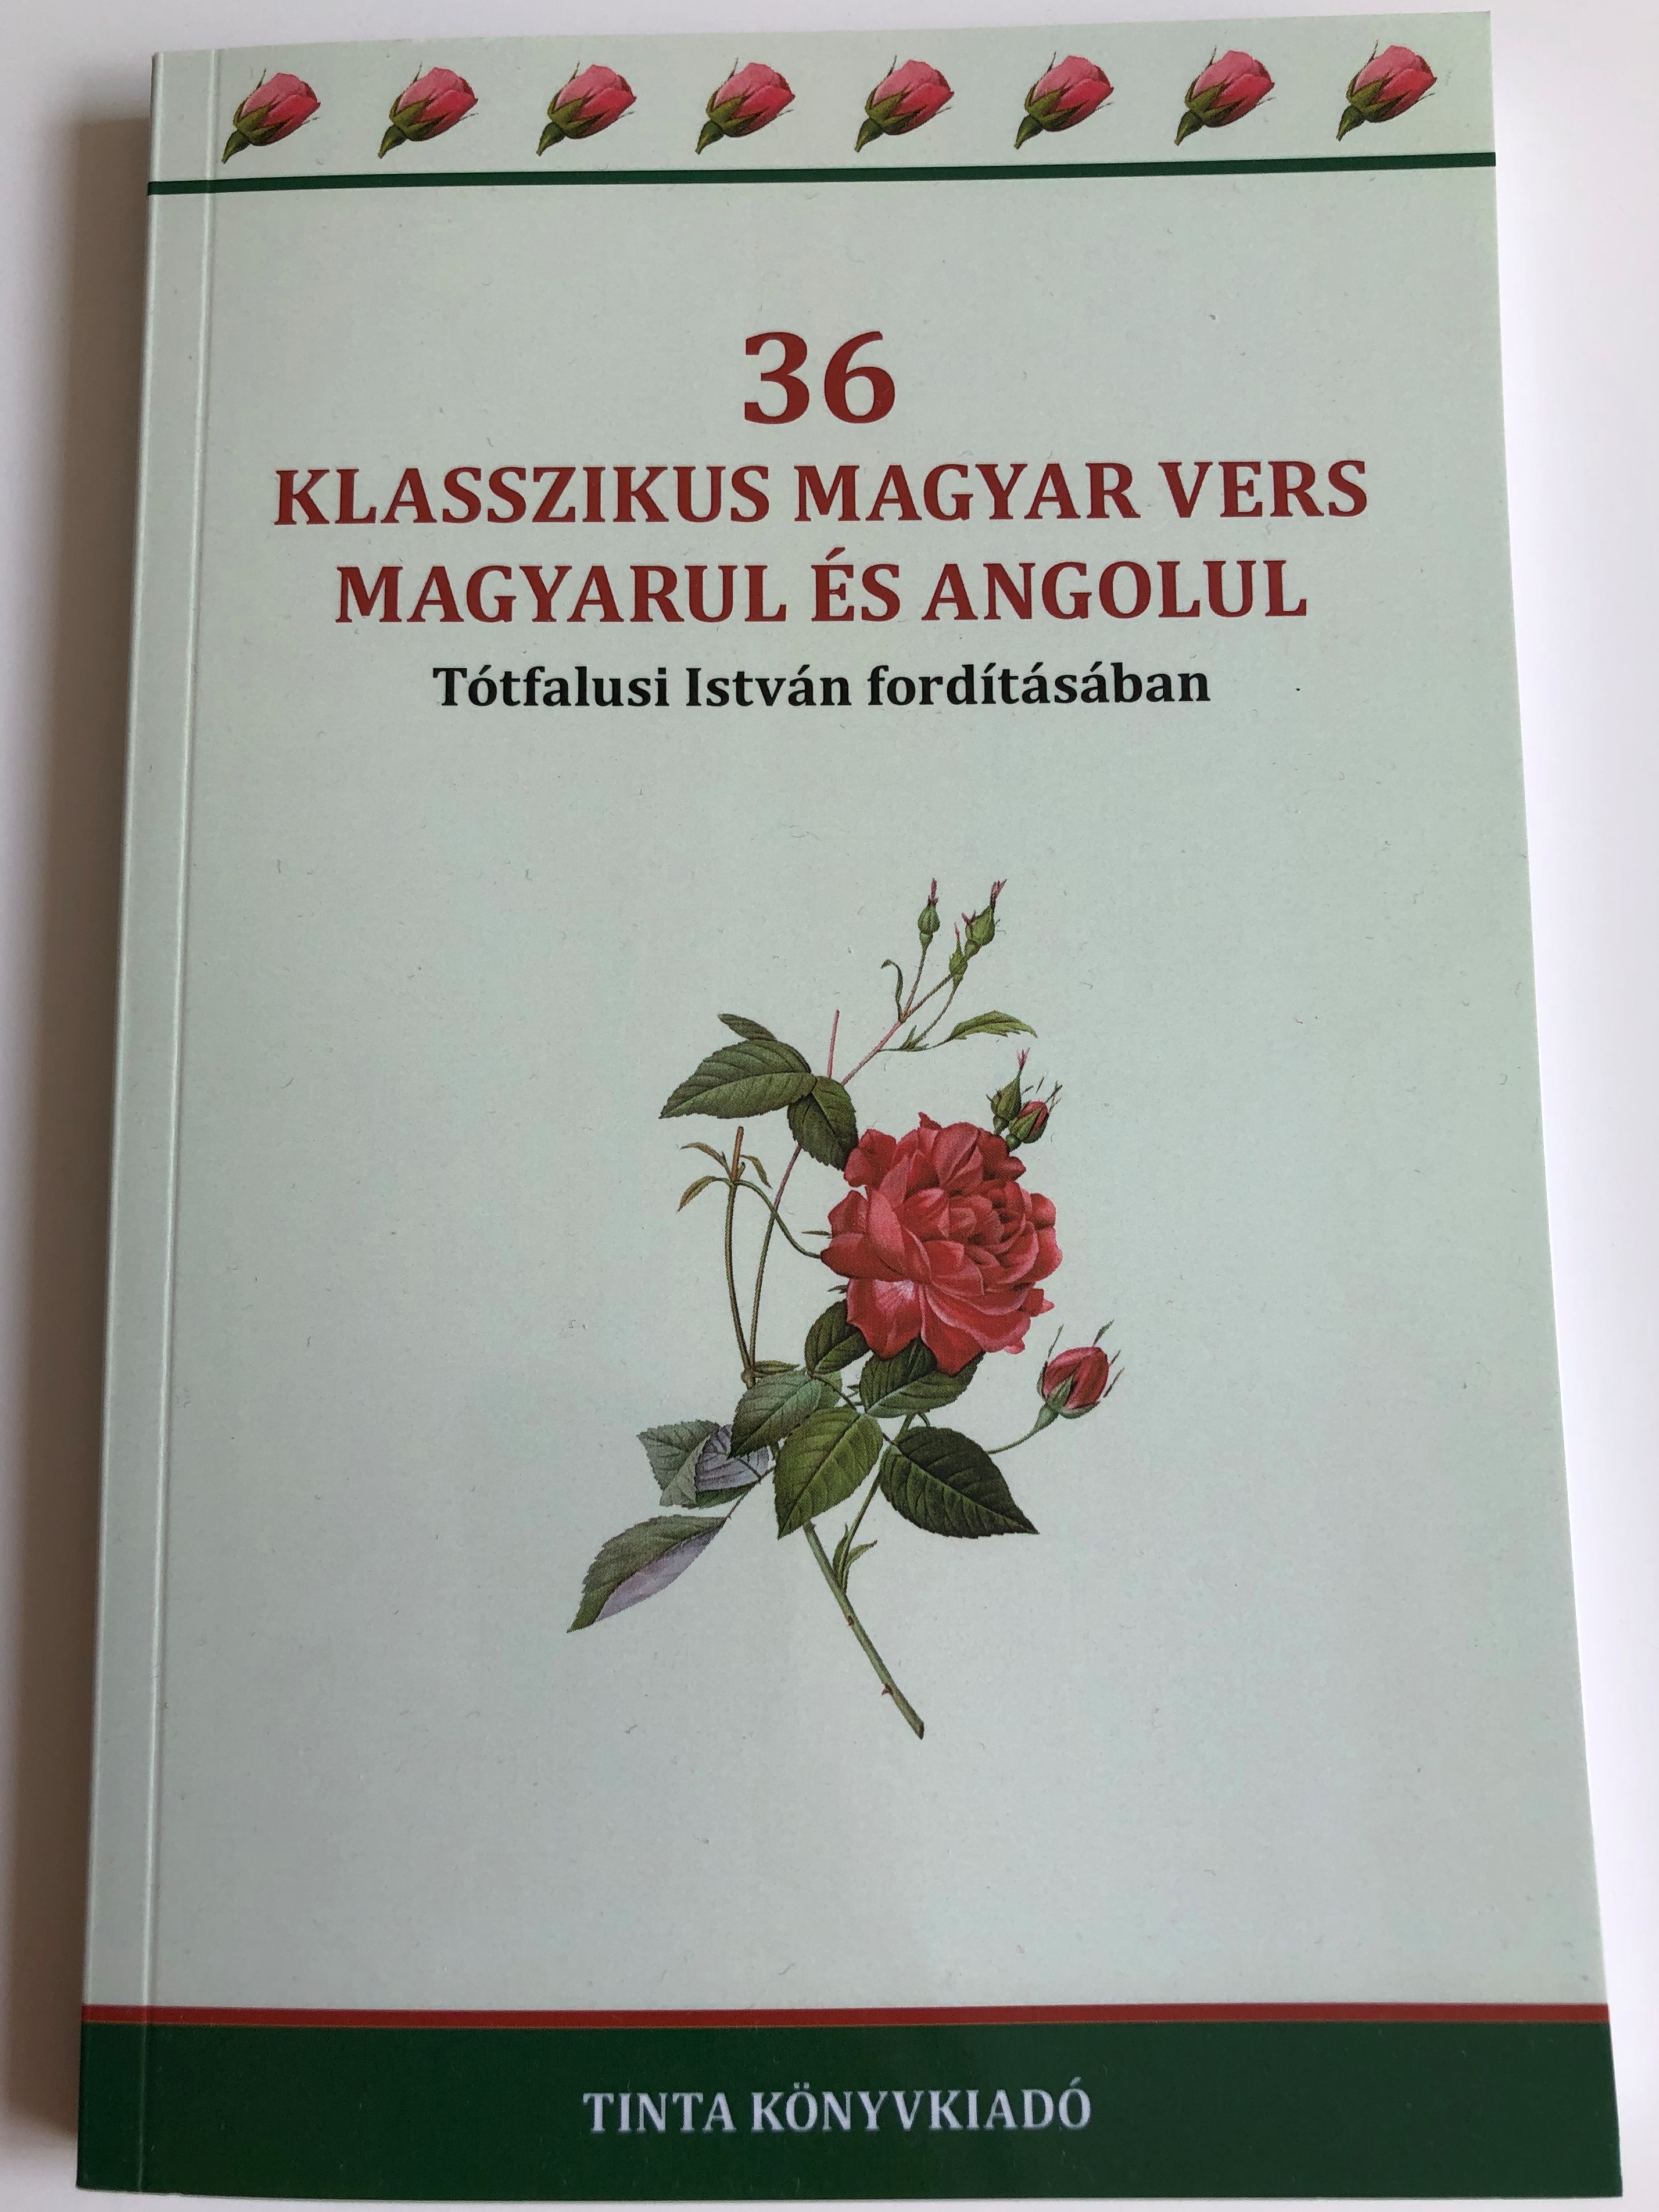 36-klasszikus-magyar-vers-magyarul-s-angolul-36-classic-hungarian-poems-in-english-and-hungarian-translation-t-tfalusi-istv-n-tinta-k-nyvkiad-2019-1-.jpg